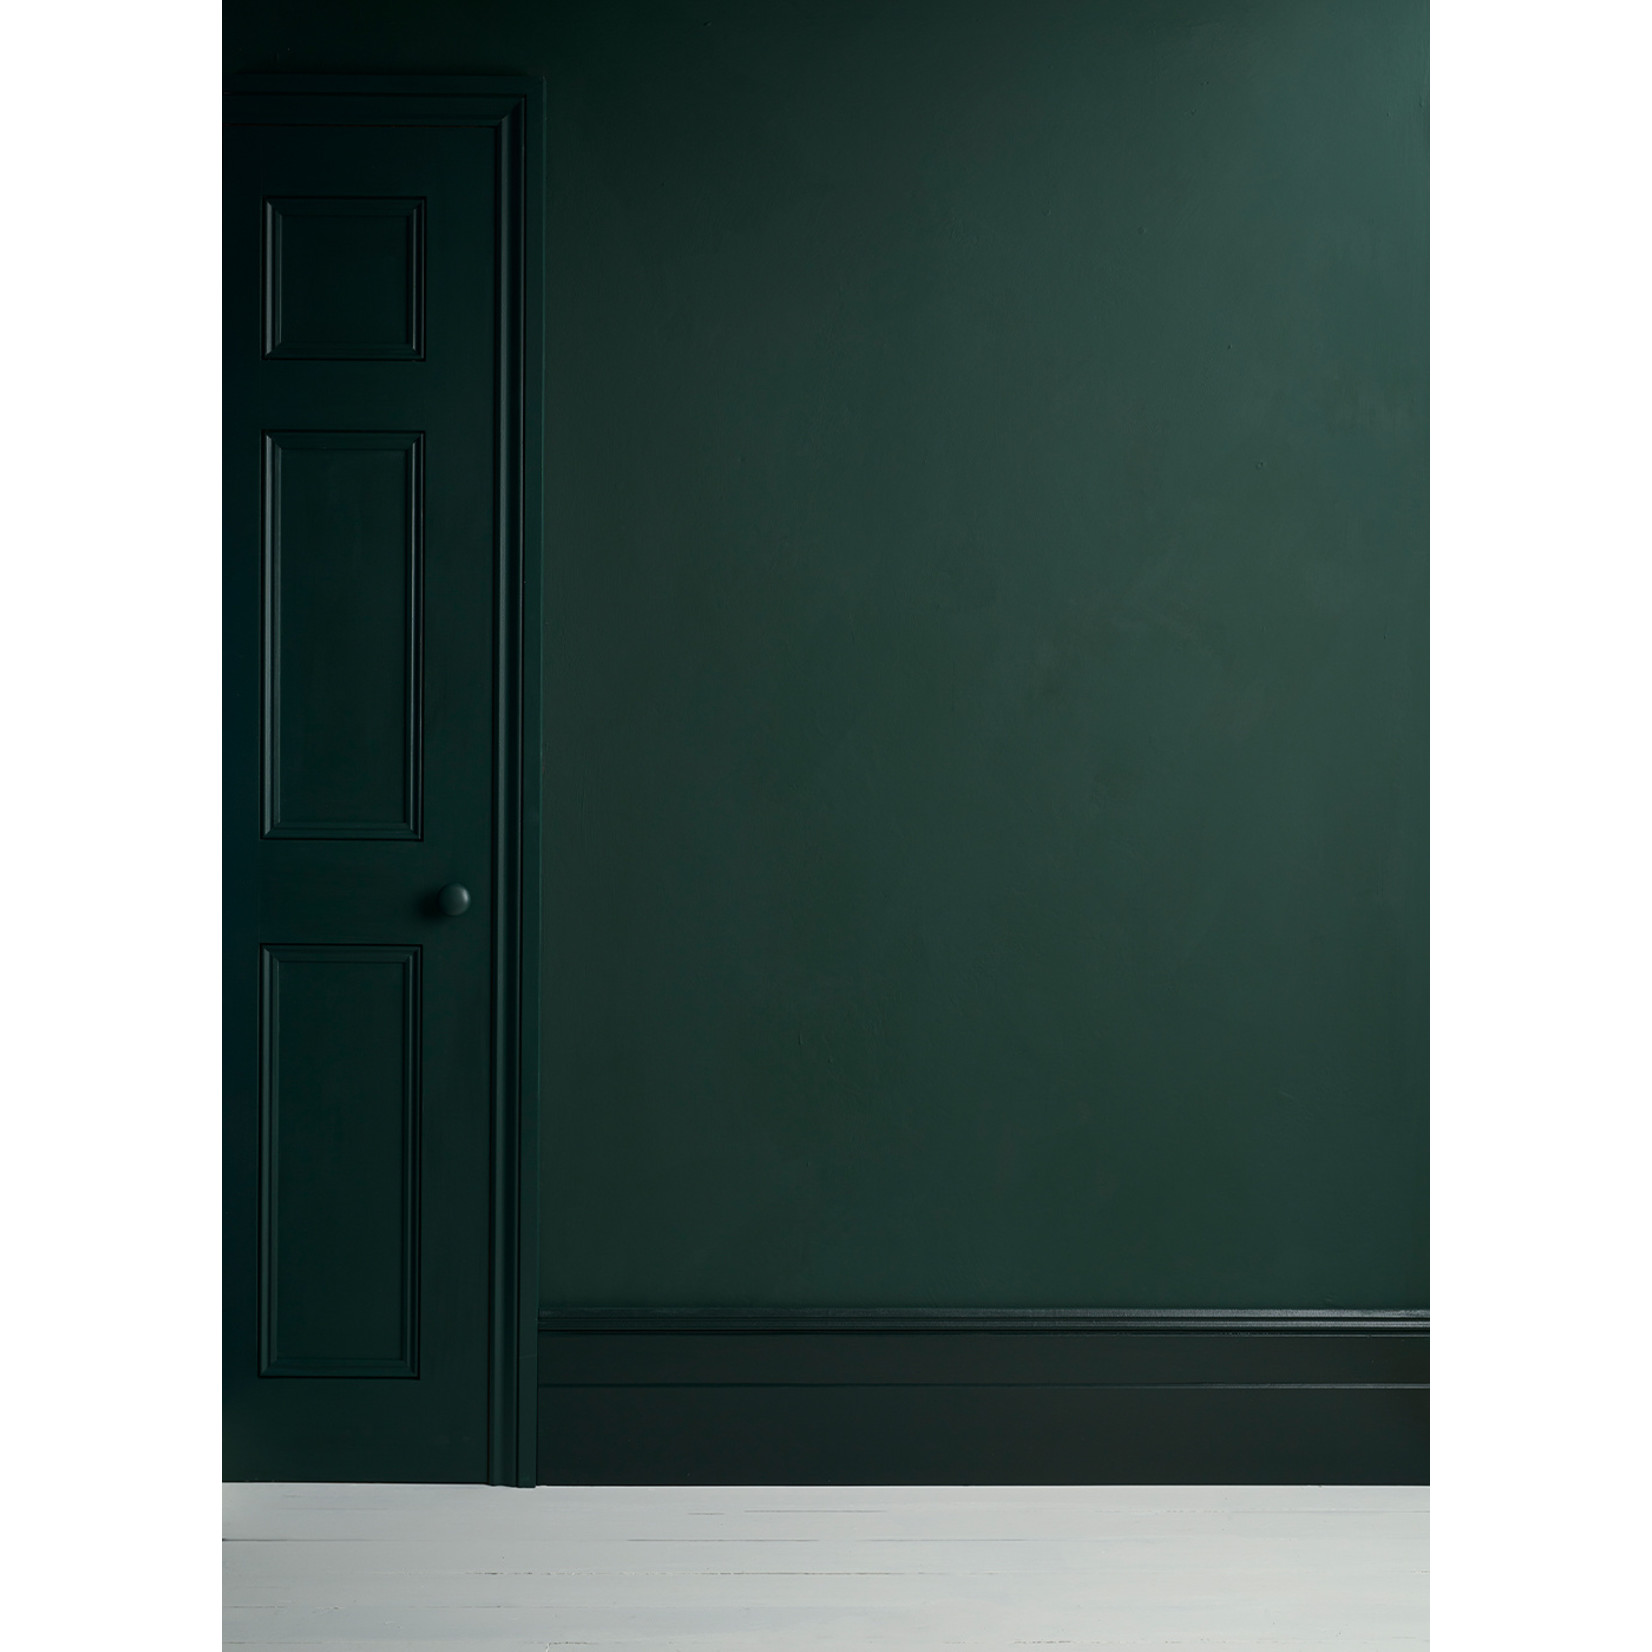 Annie Sloan Satin Paint Knightsbridge Green - 750 ml